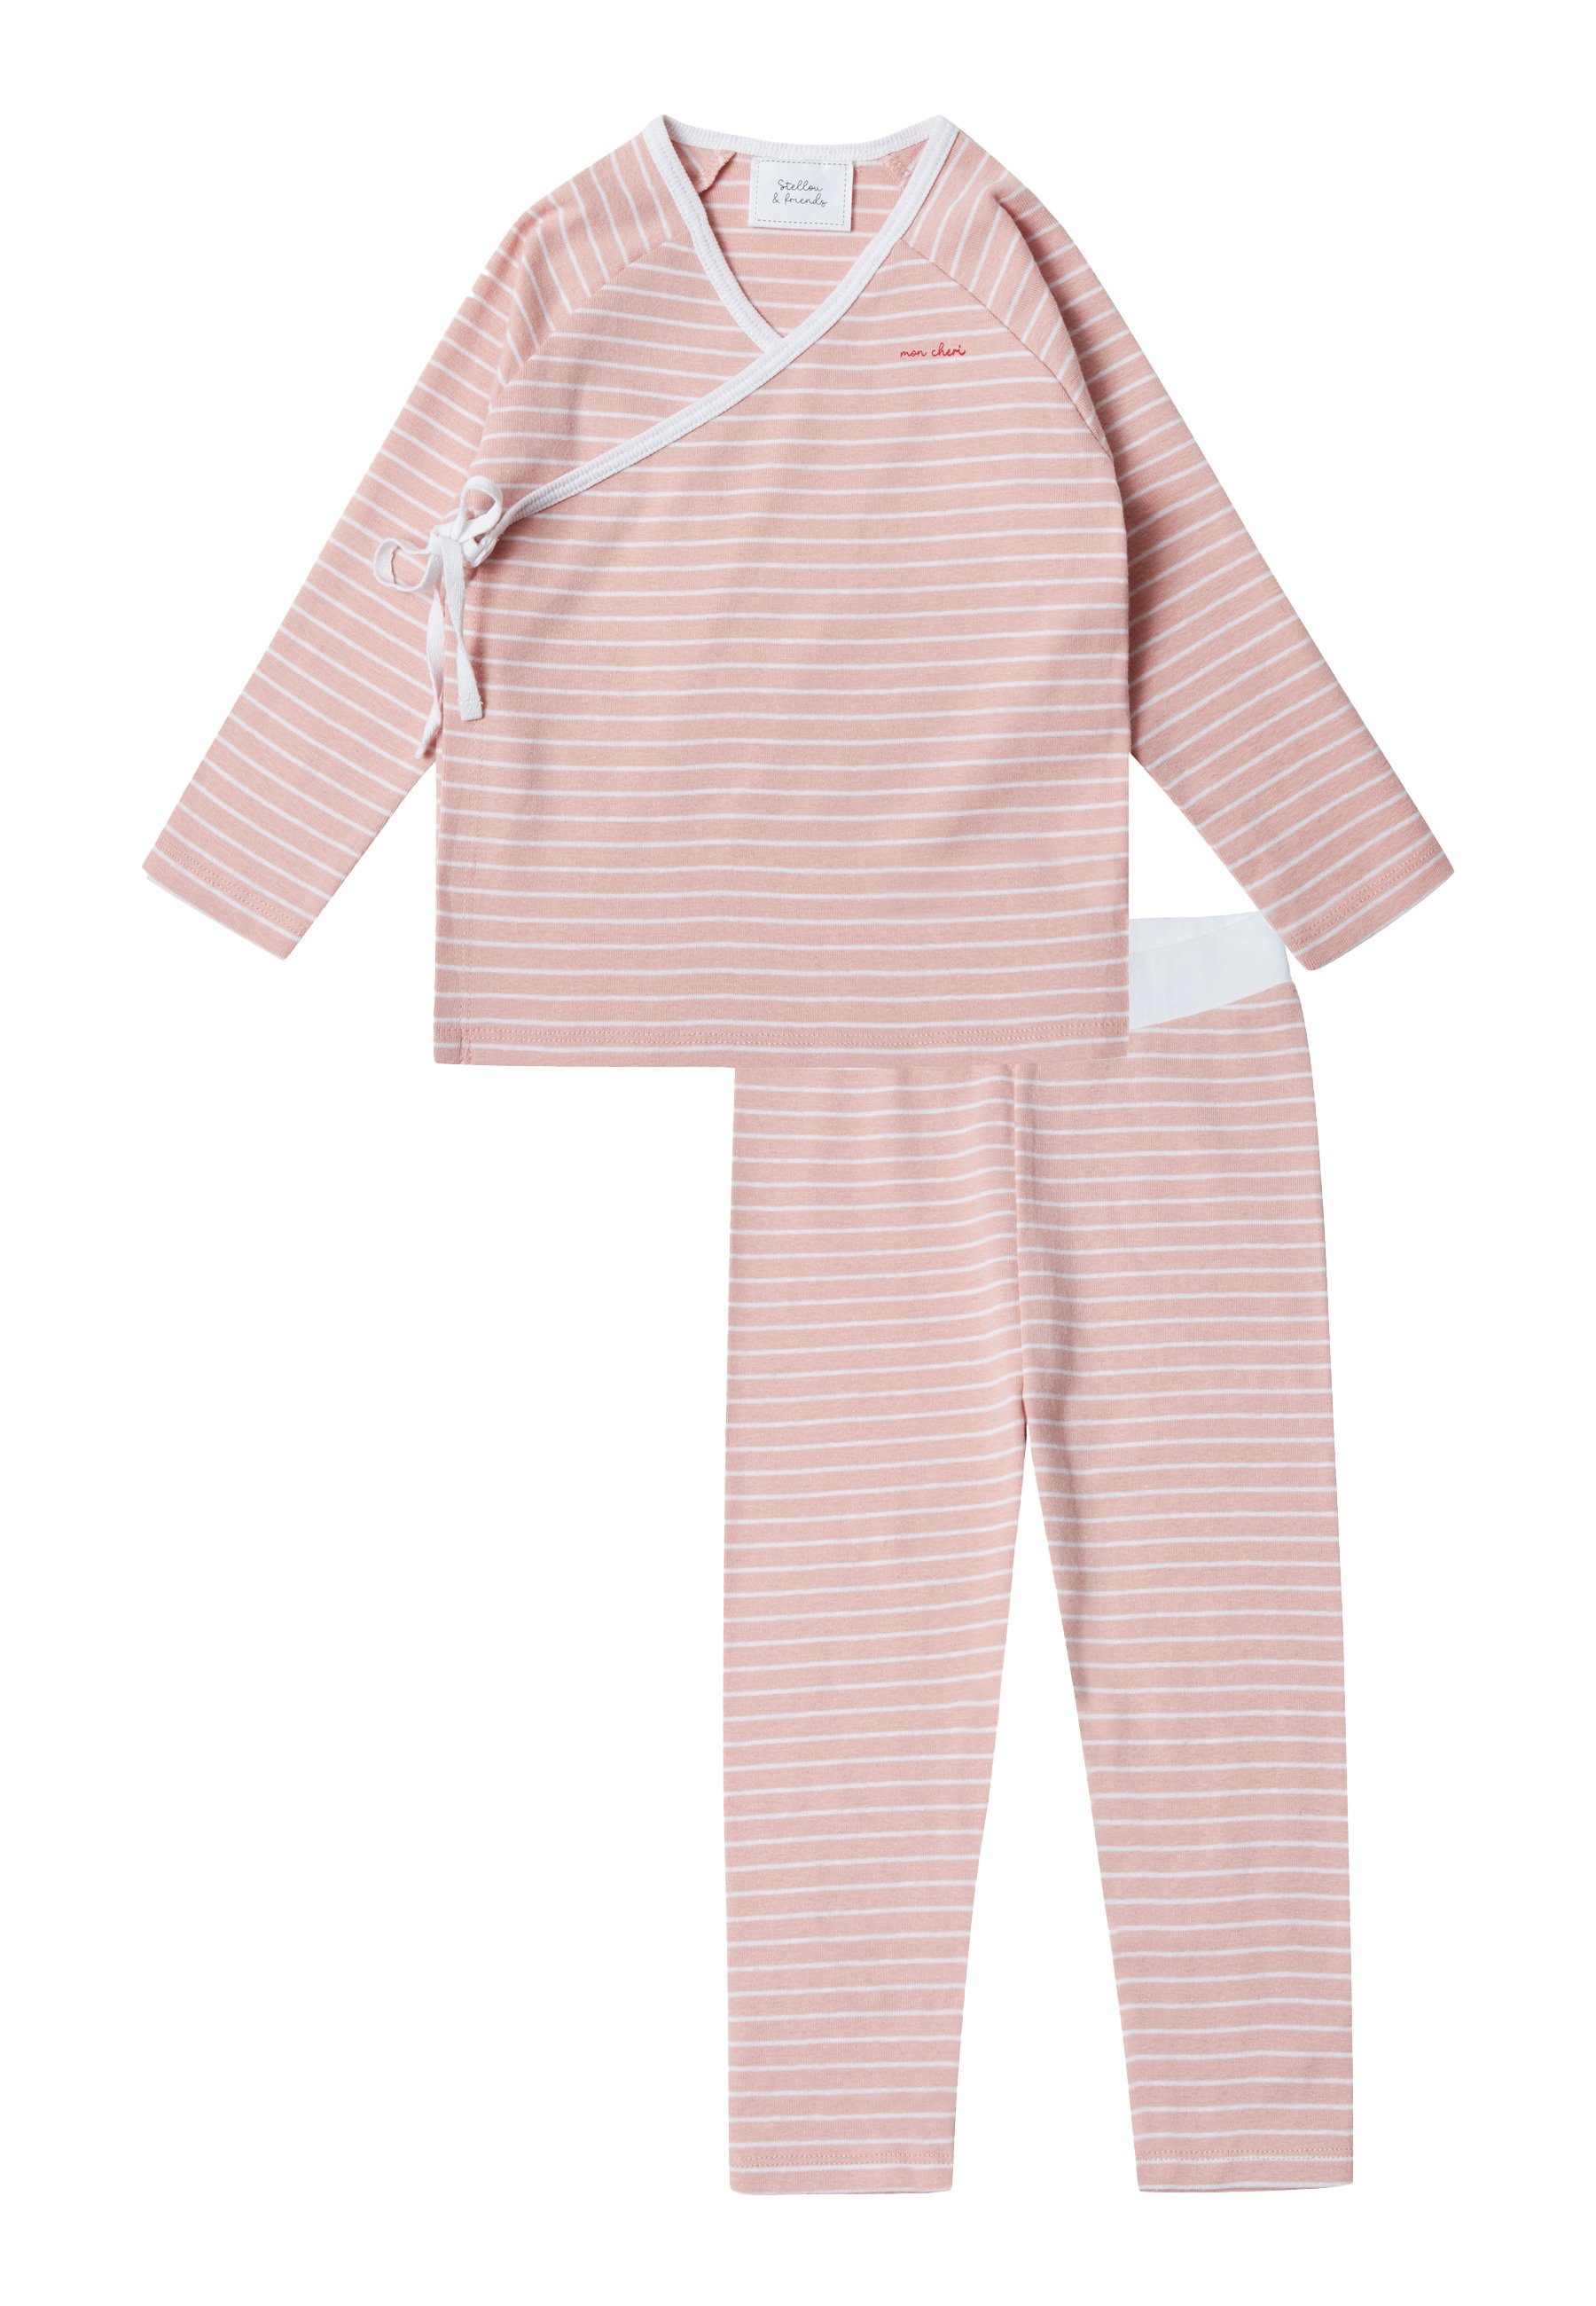 Stellou & friends Pyjama Home-Wear Set / Pyjama 2tlg. rosa